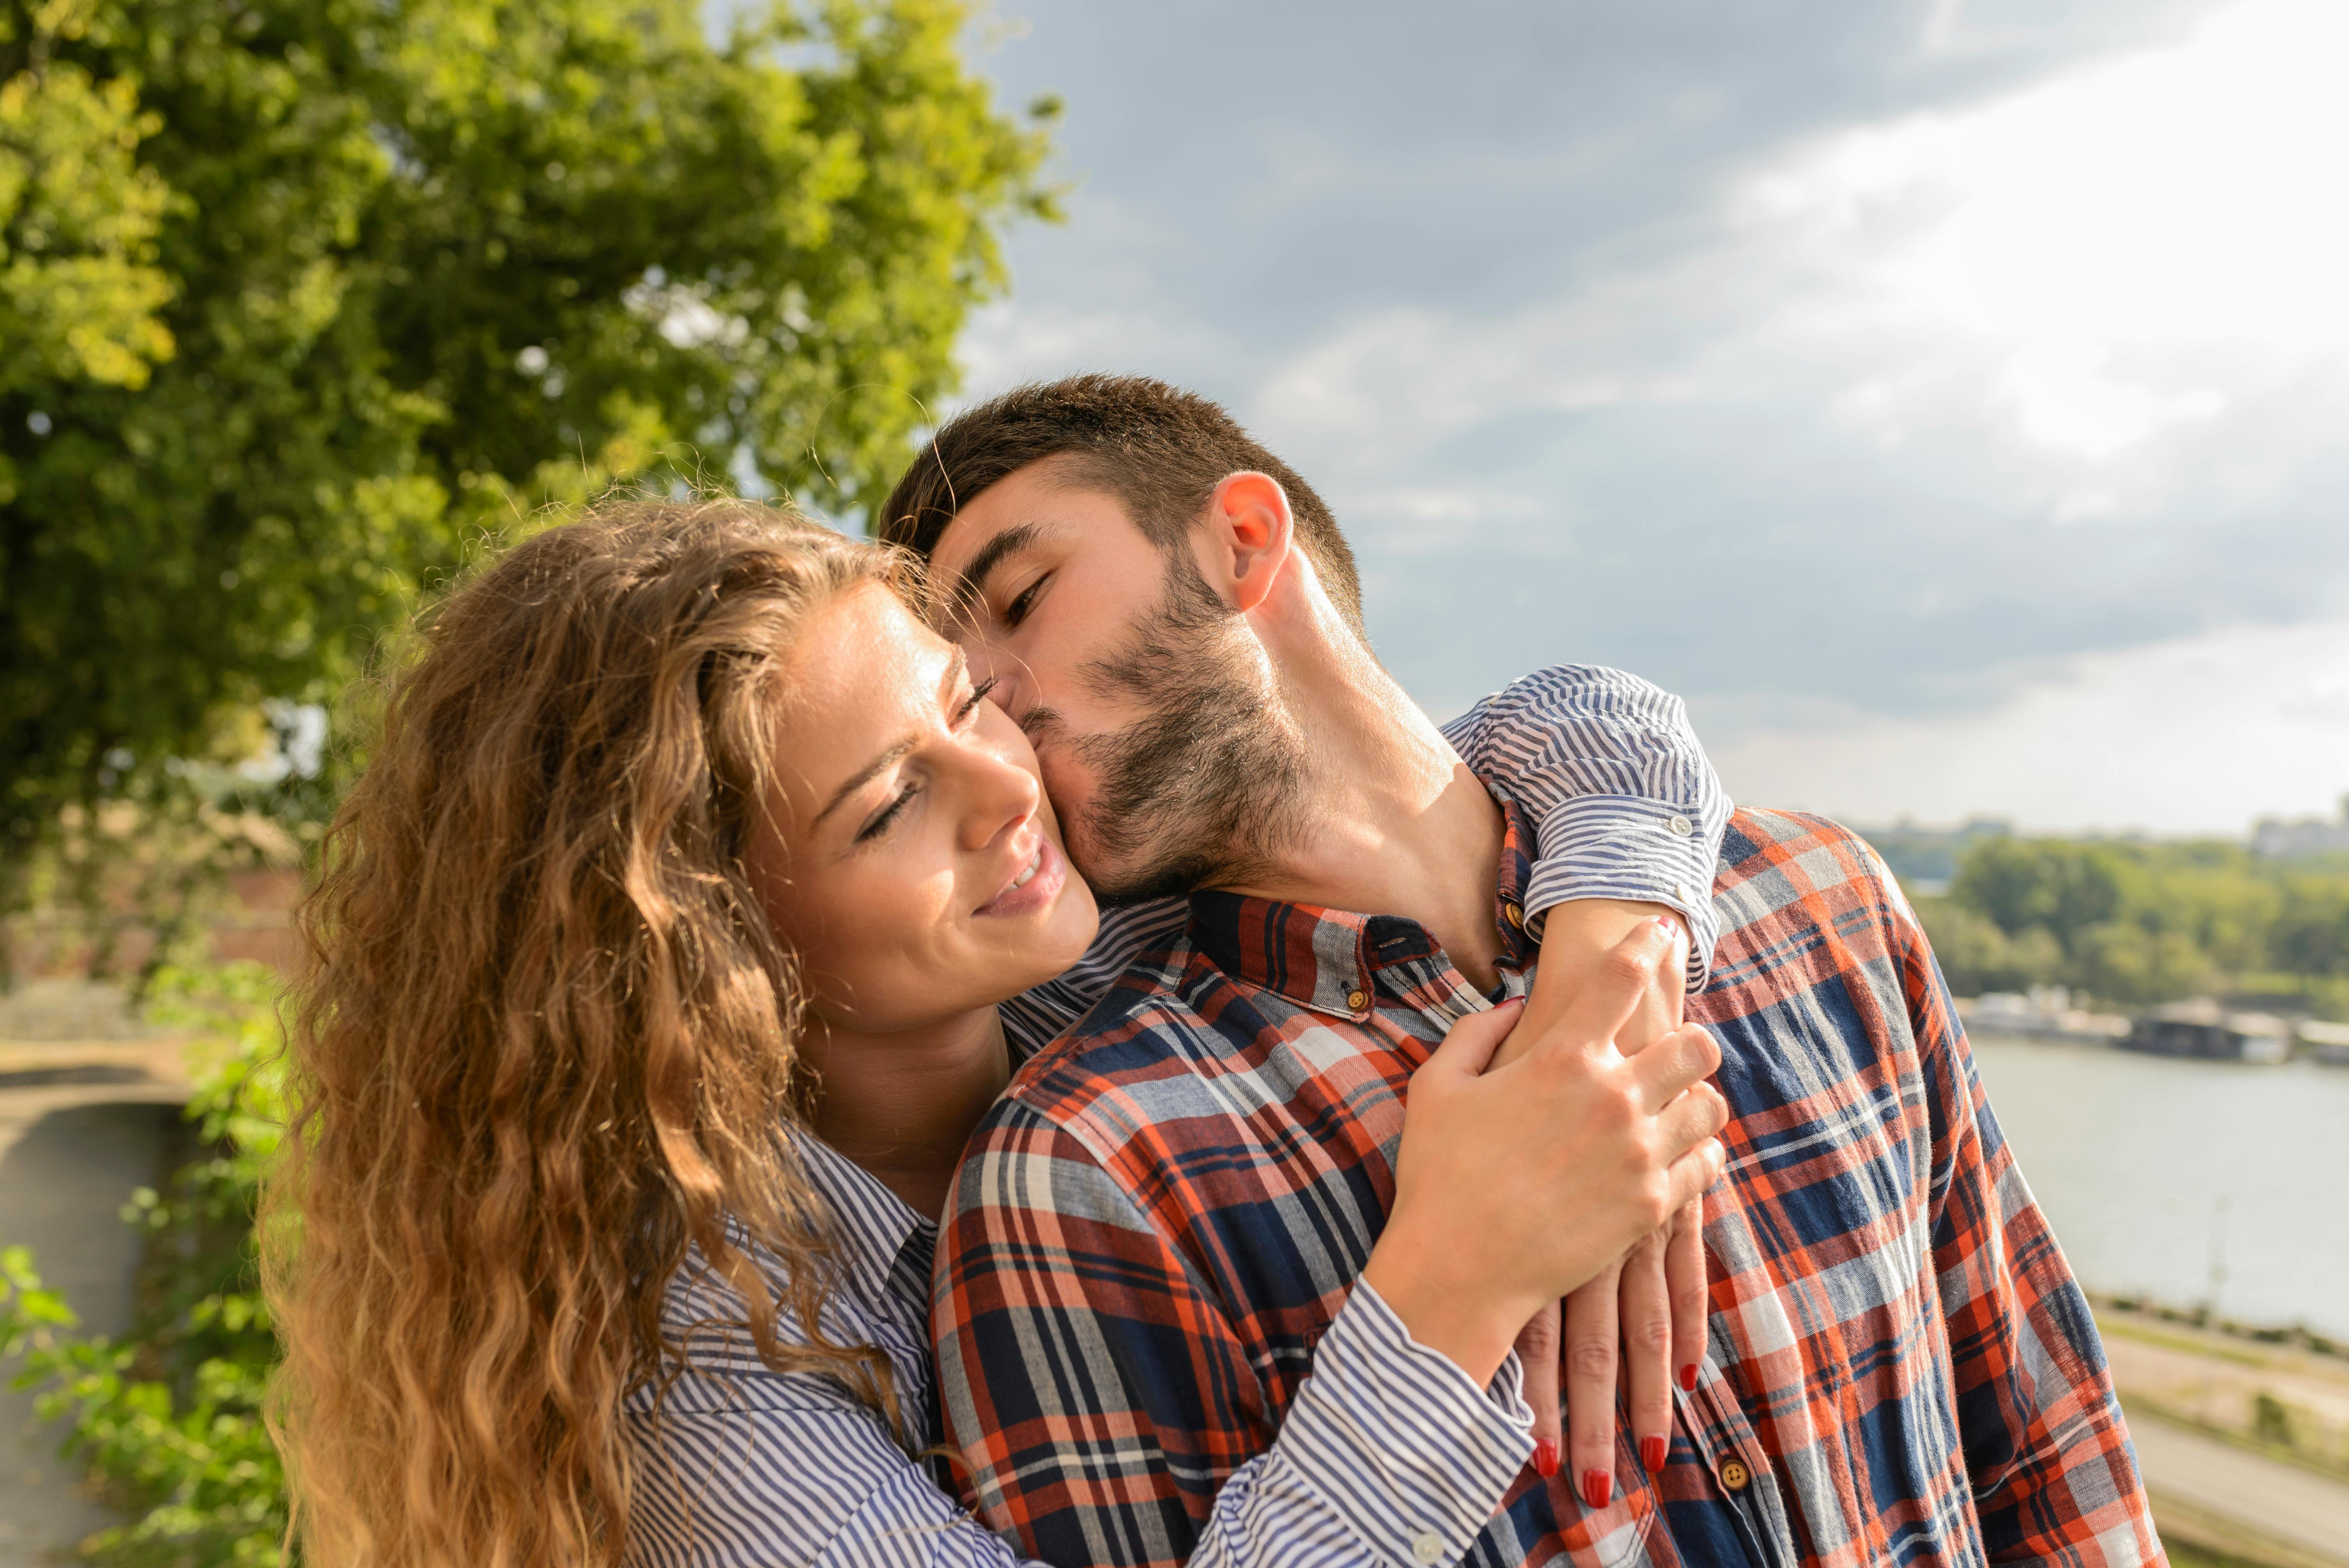 A man kissing a woman on the cheek | Source: Pexels